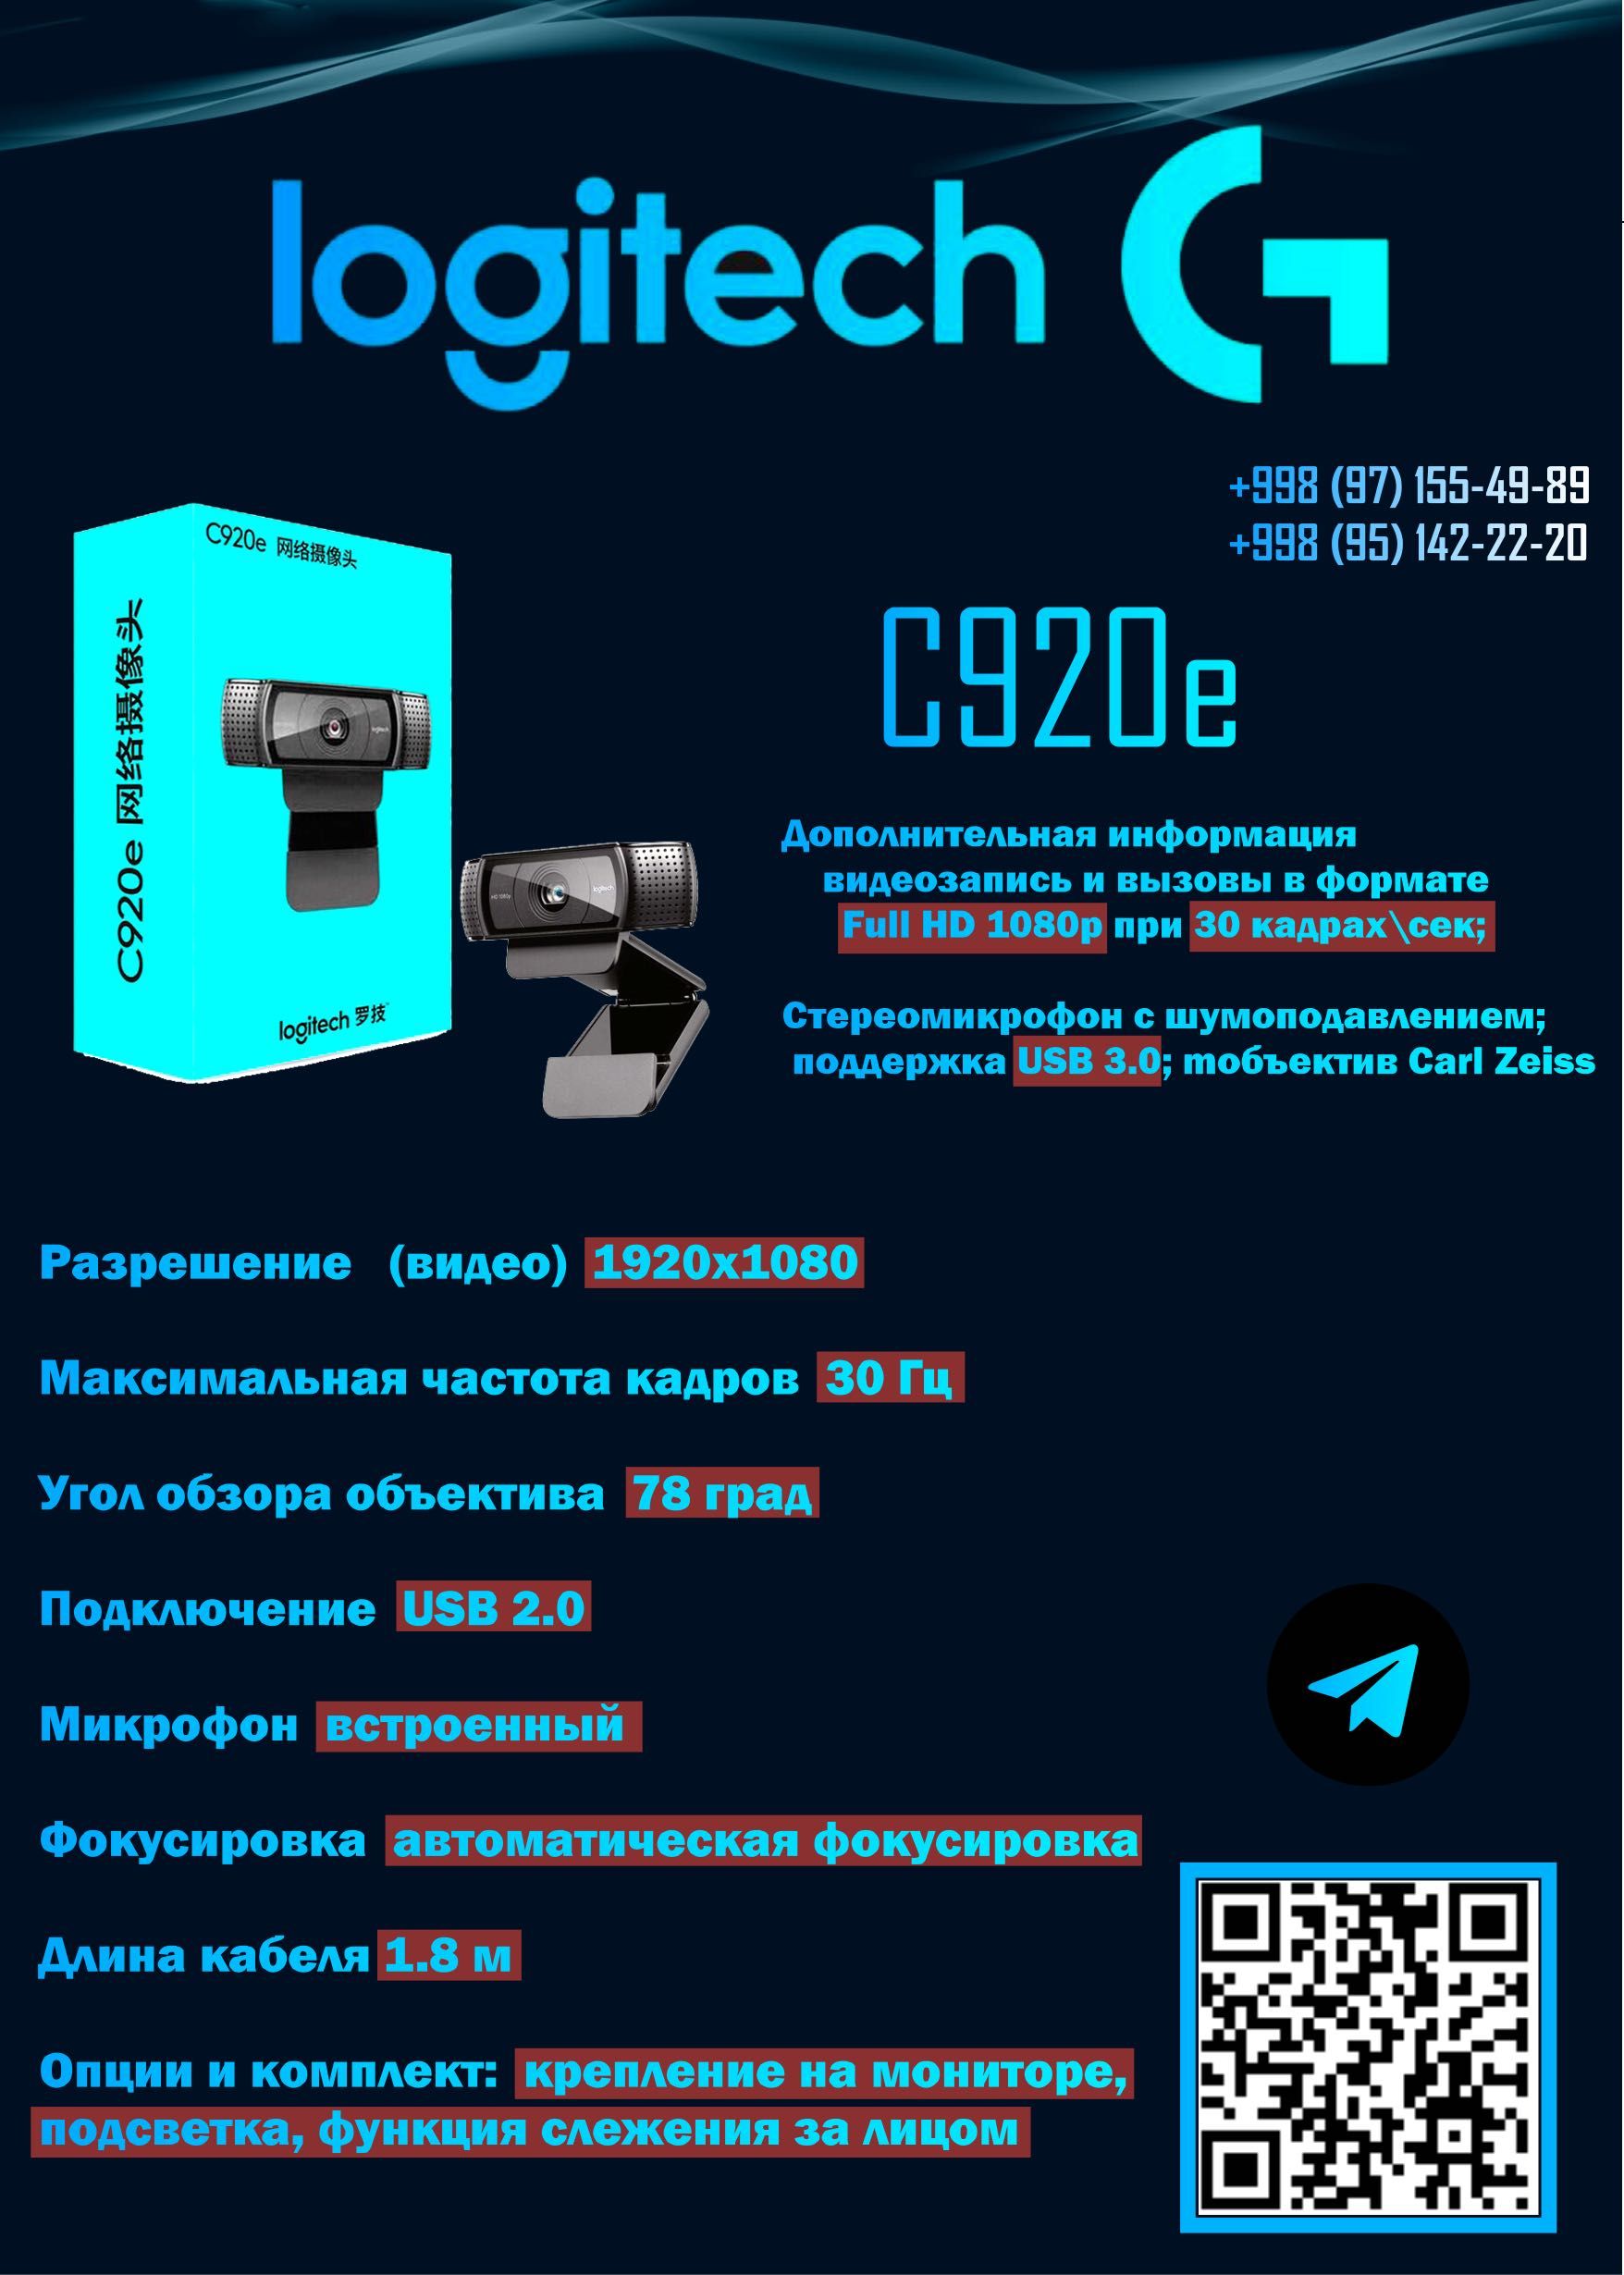 Logitech C920e ВЕБ-КАМЕРА бизнес-класса